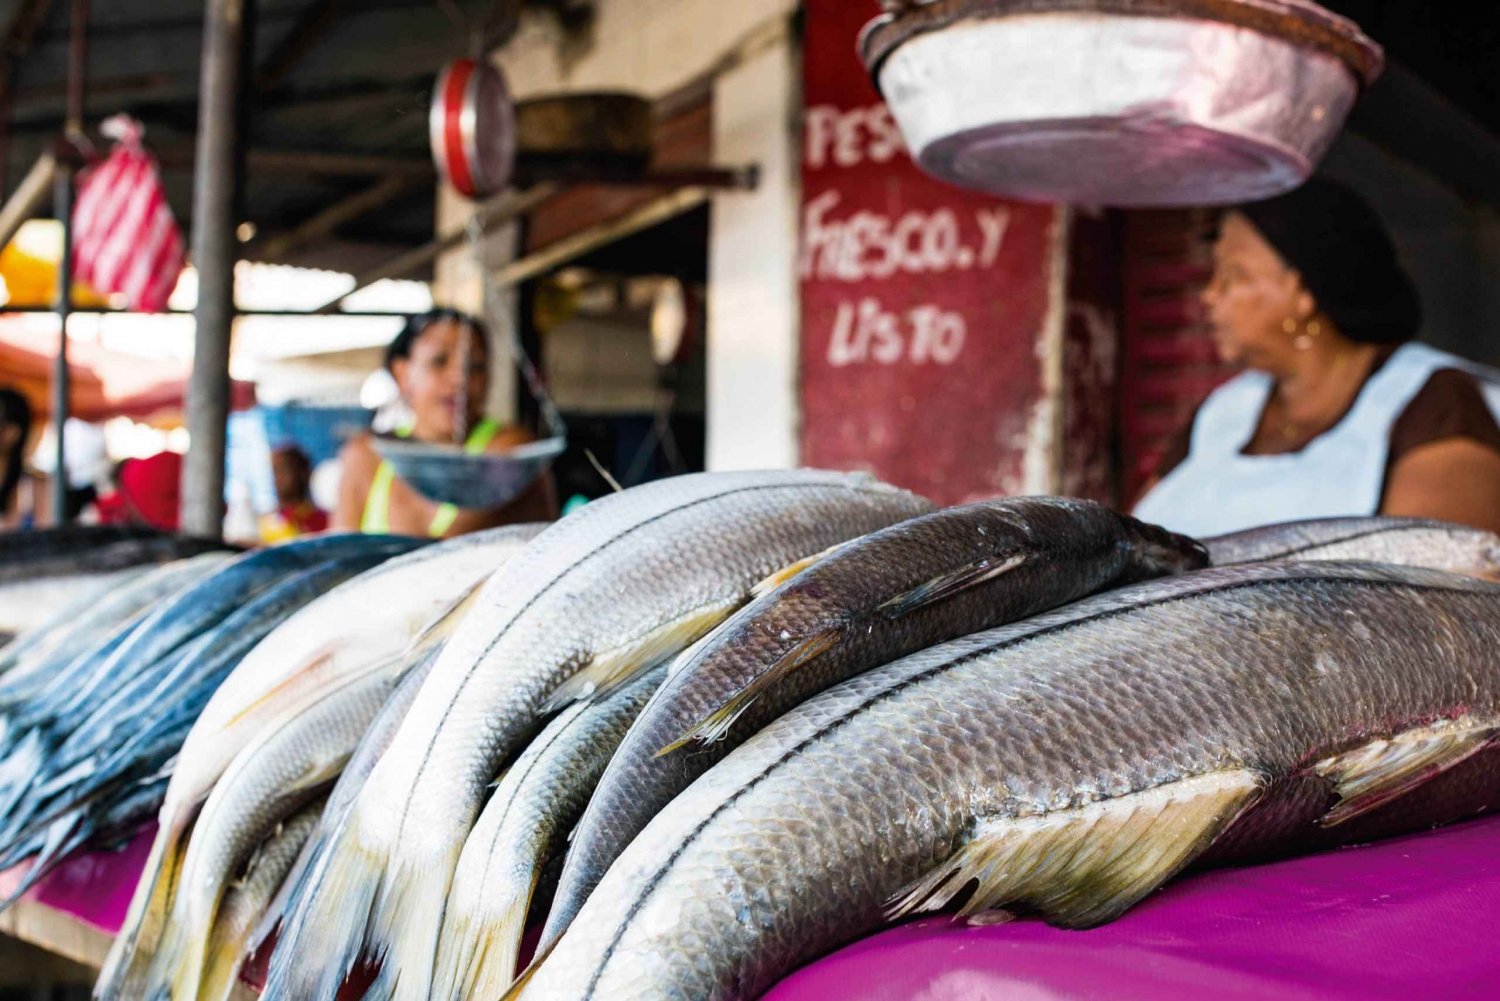 Cartagena: Bazurto Market Food Tour by Anthony Bourdain